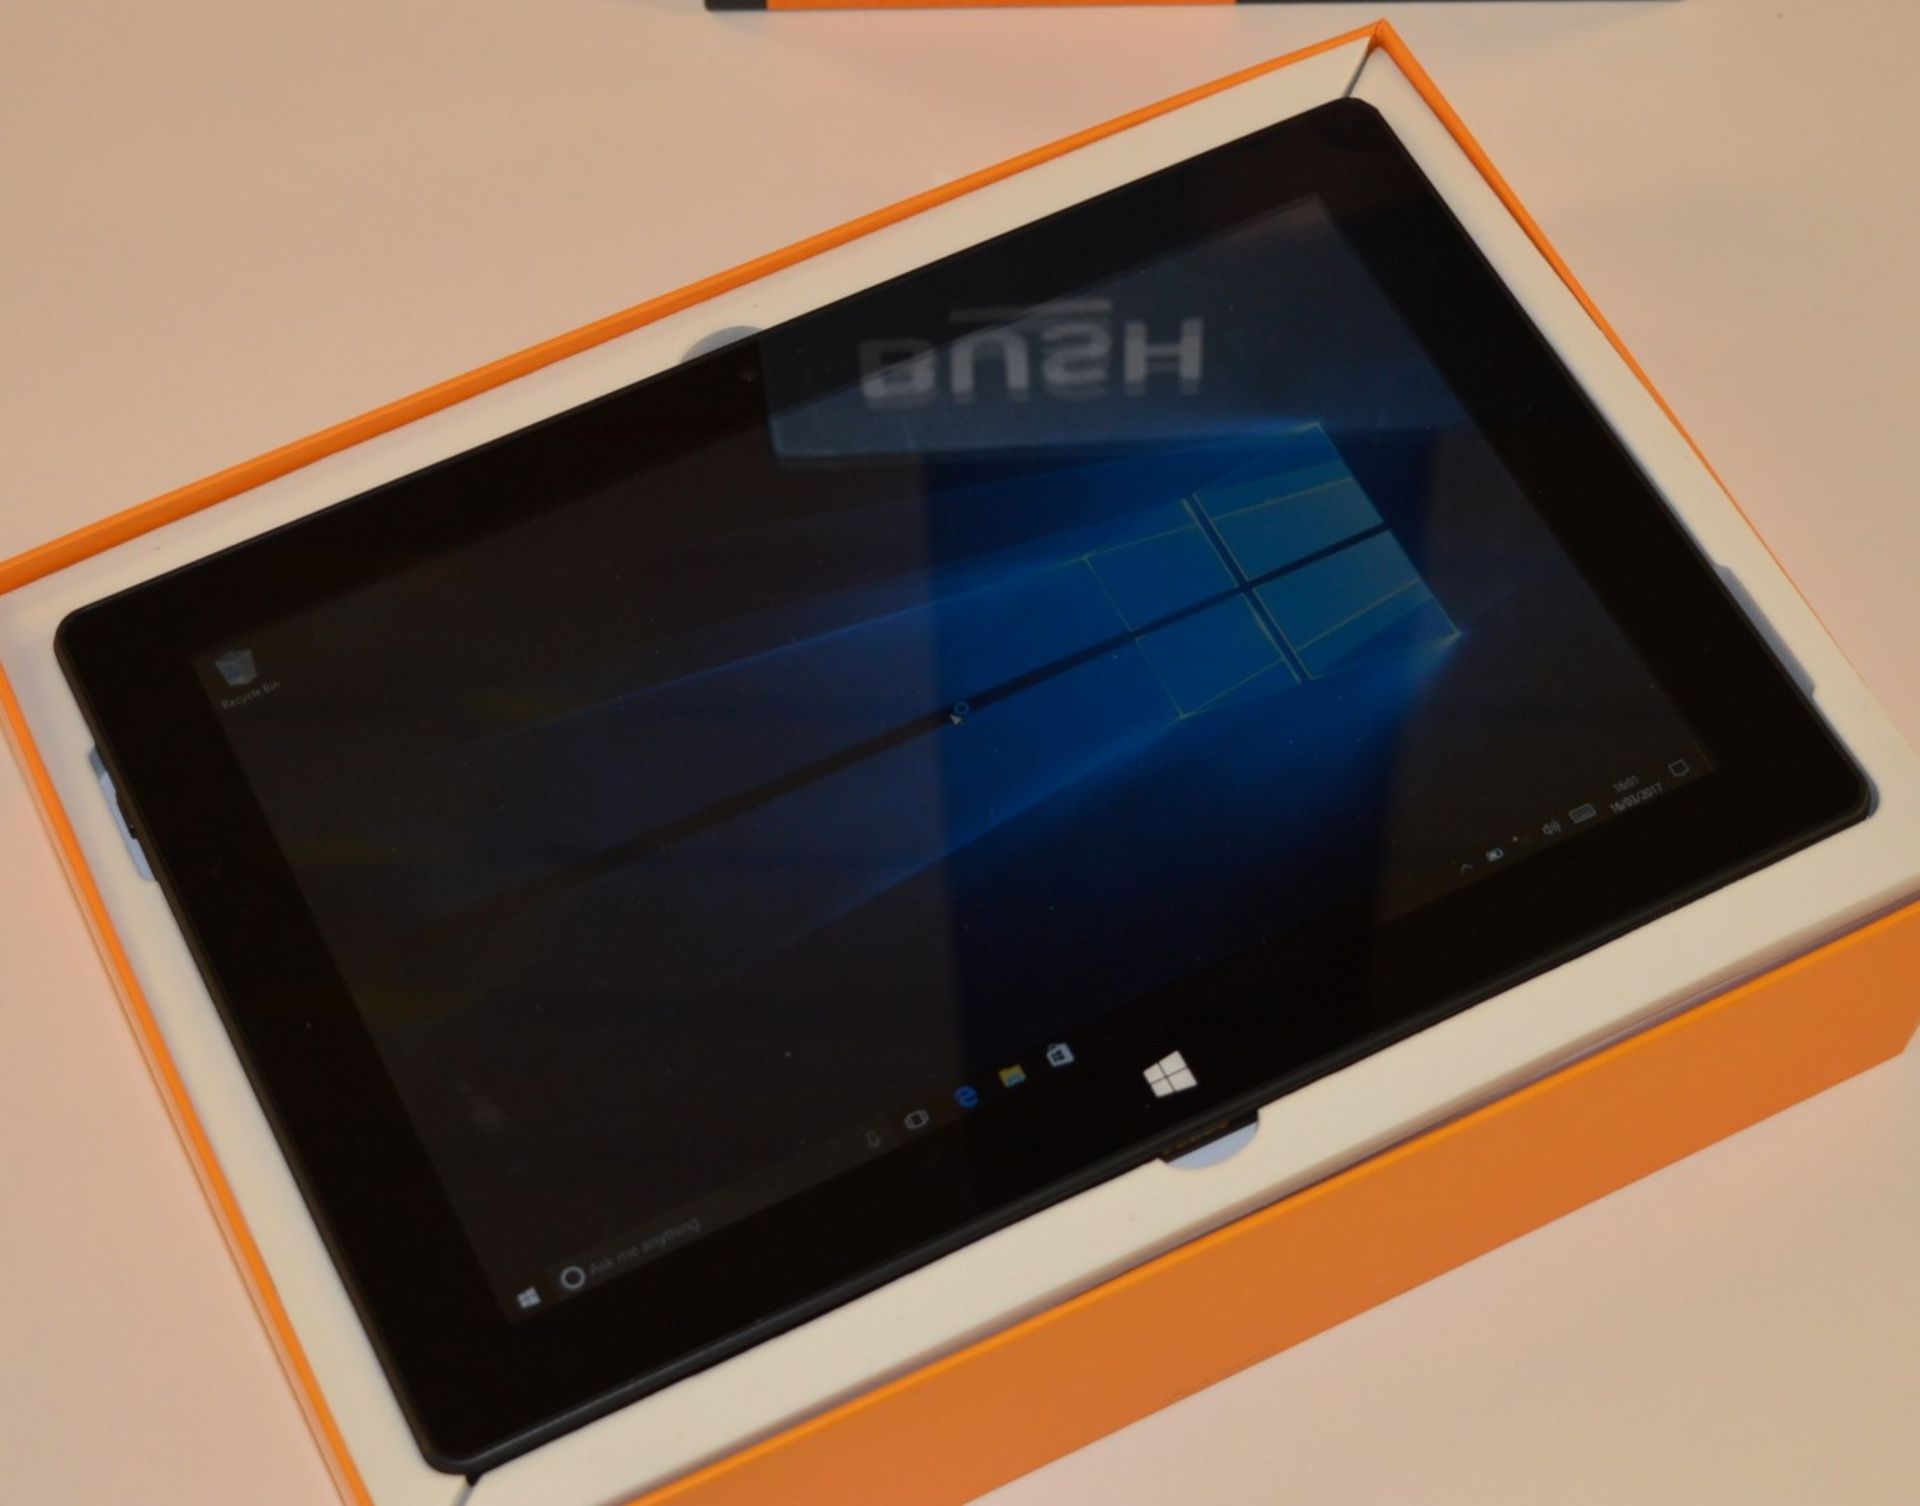 1 x Bush A1 10.1 Inch Windows Tablet - Features Include Intel Atom 1.8ghz Quad Core Processor, 1gb